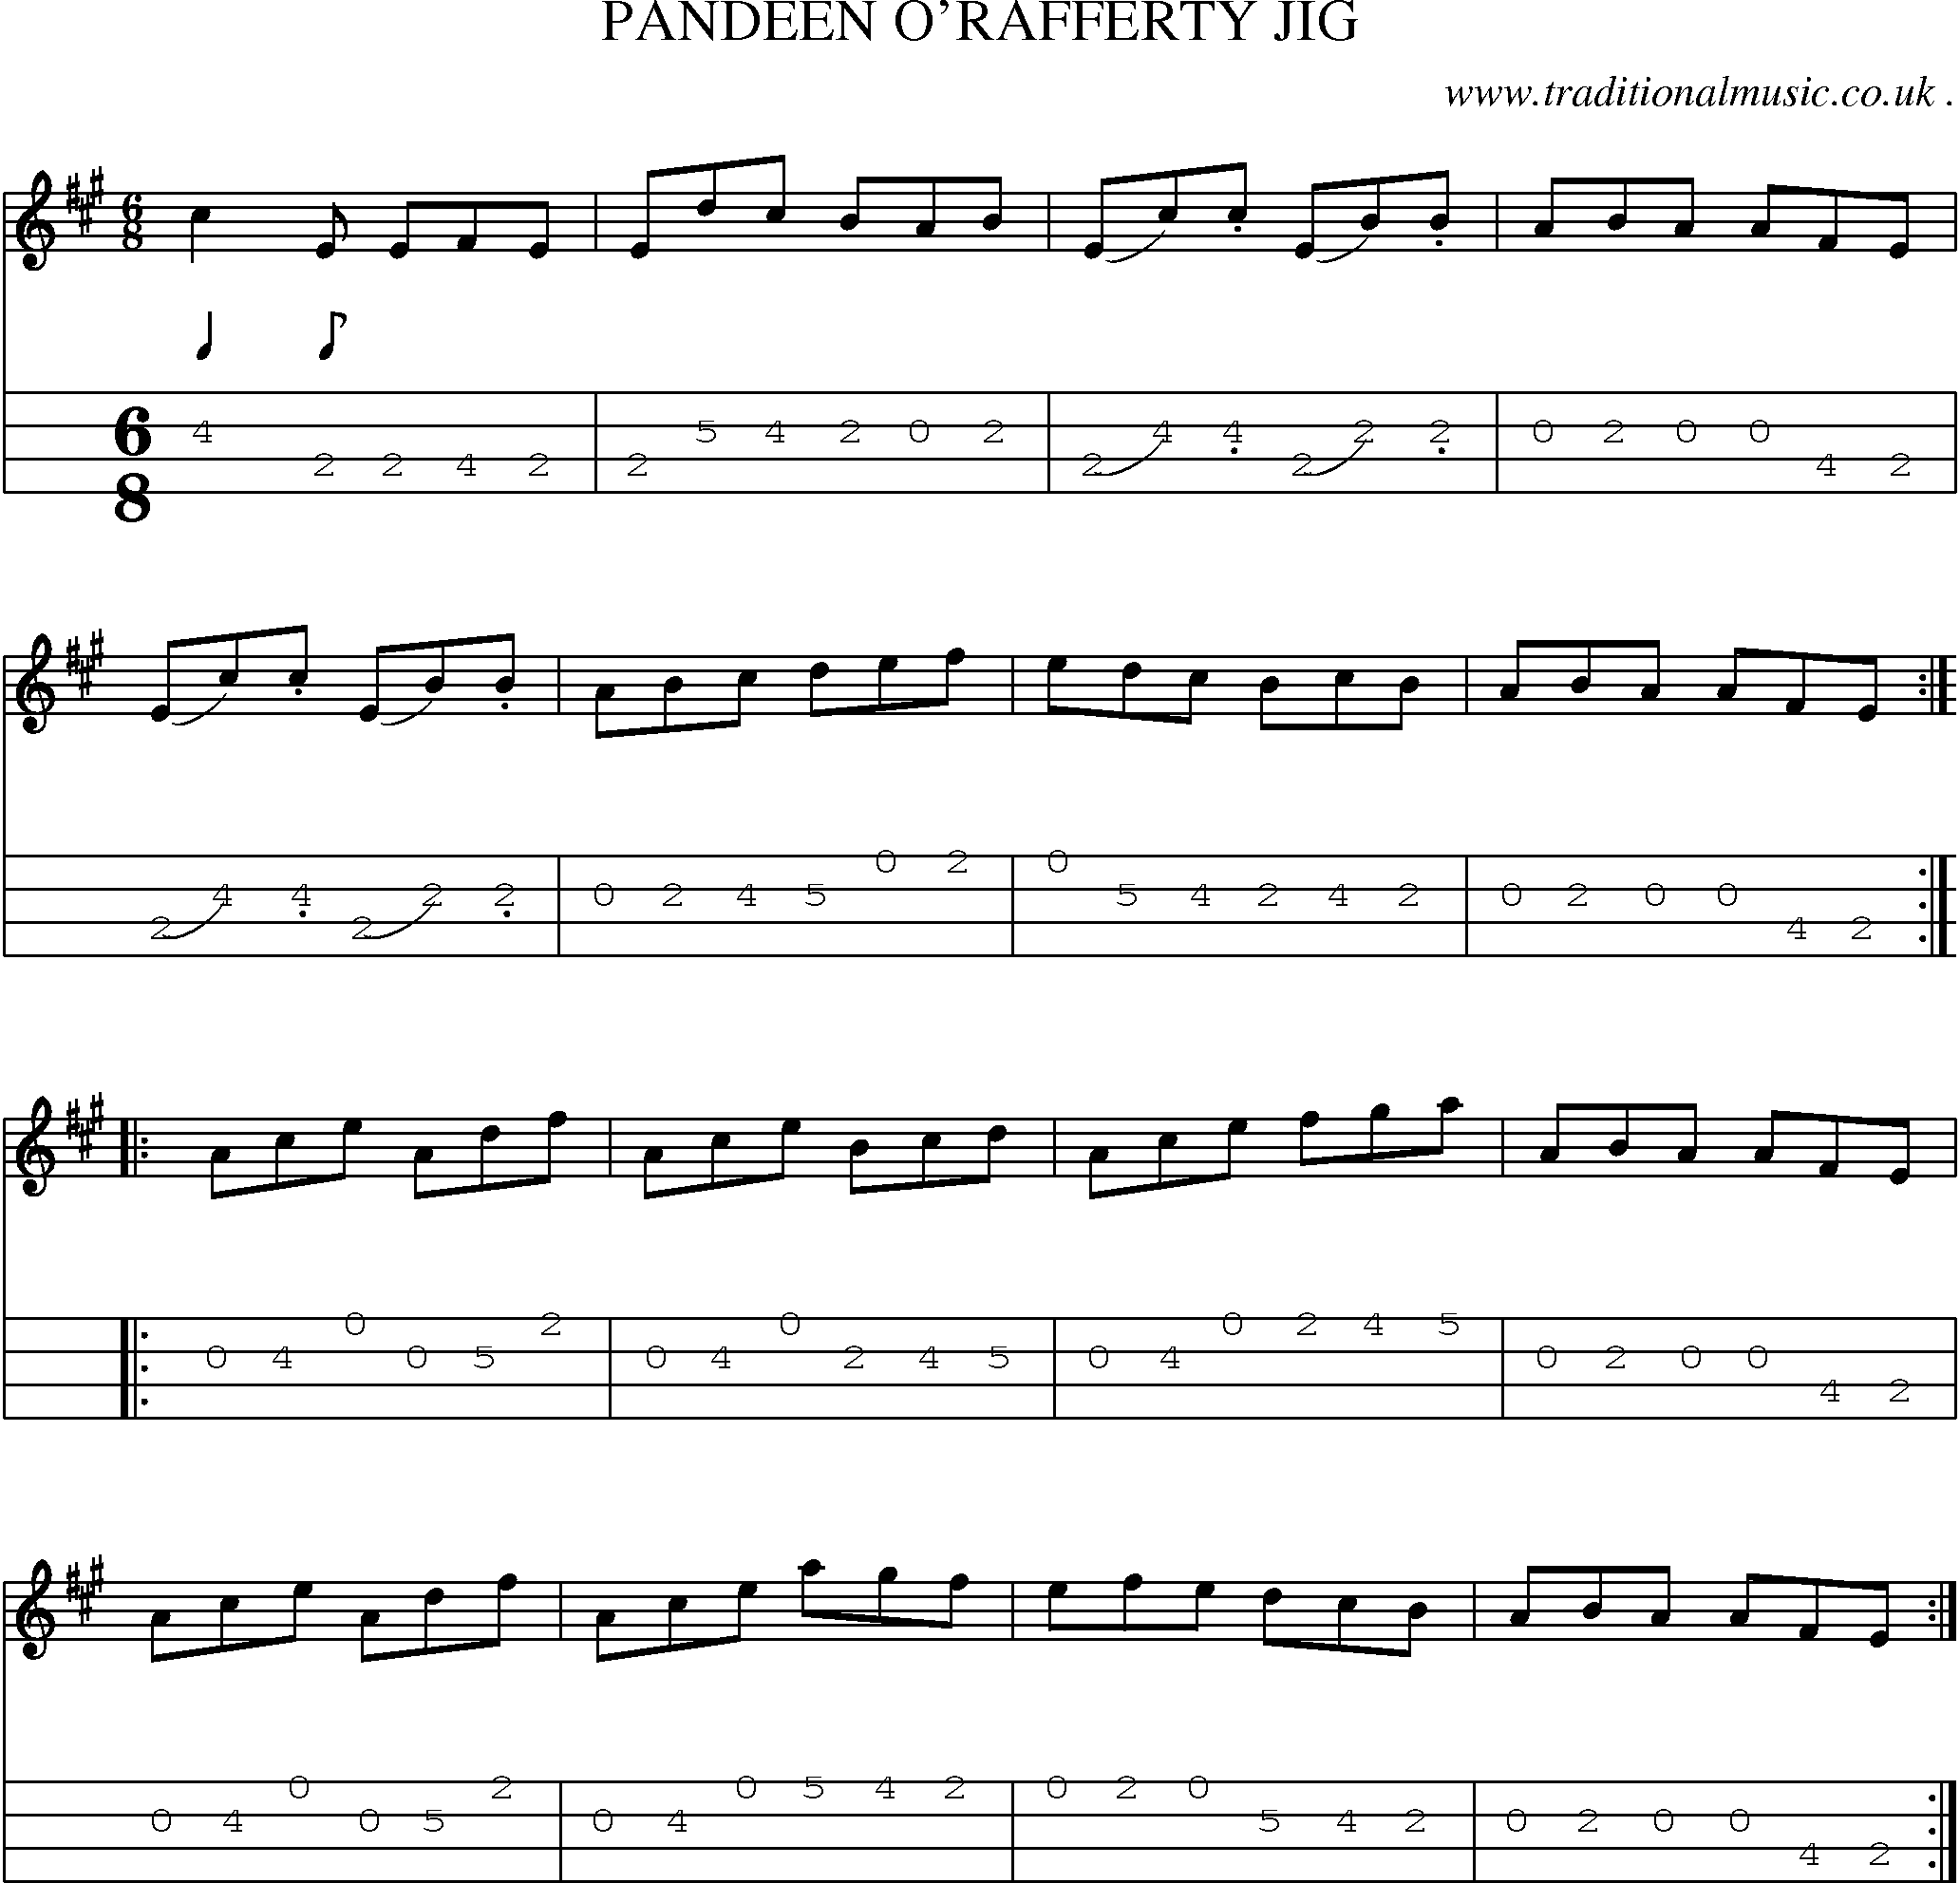 Sheet-Music and Mandolin Tabs for Pandeen Orafferty Jig